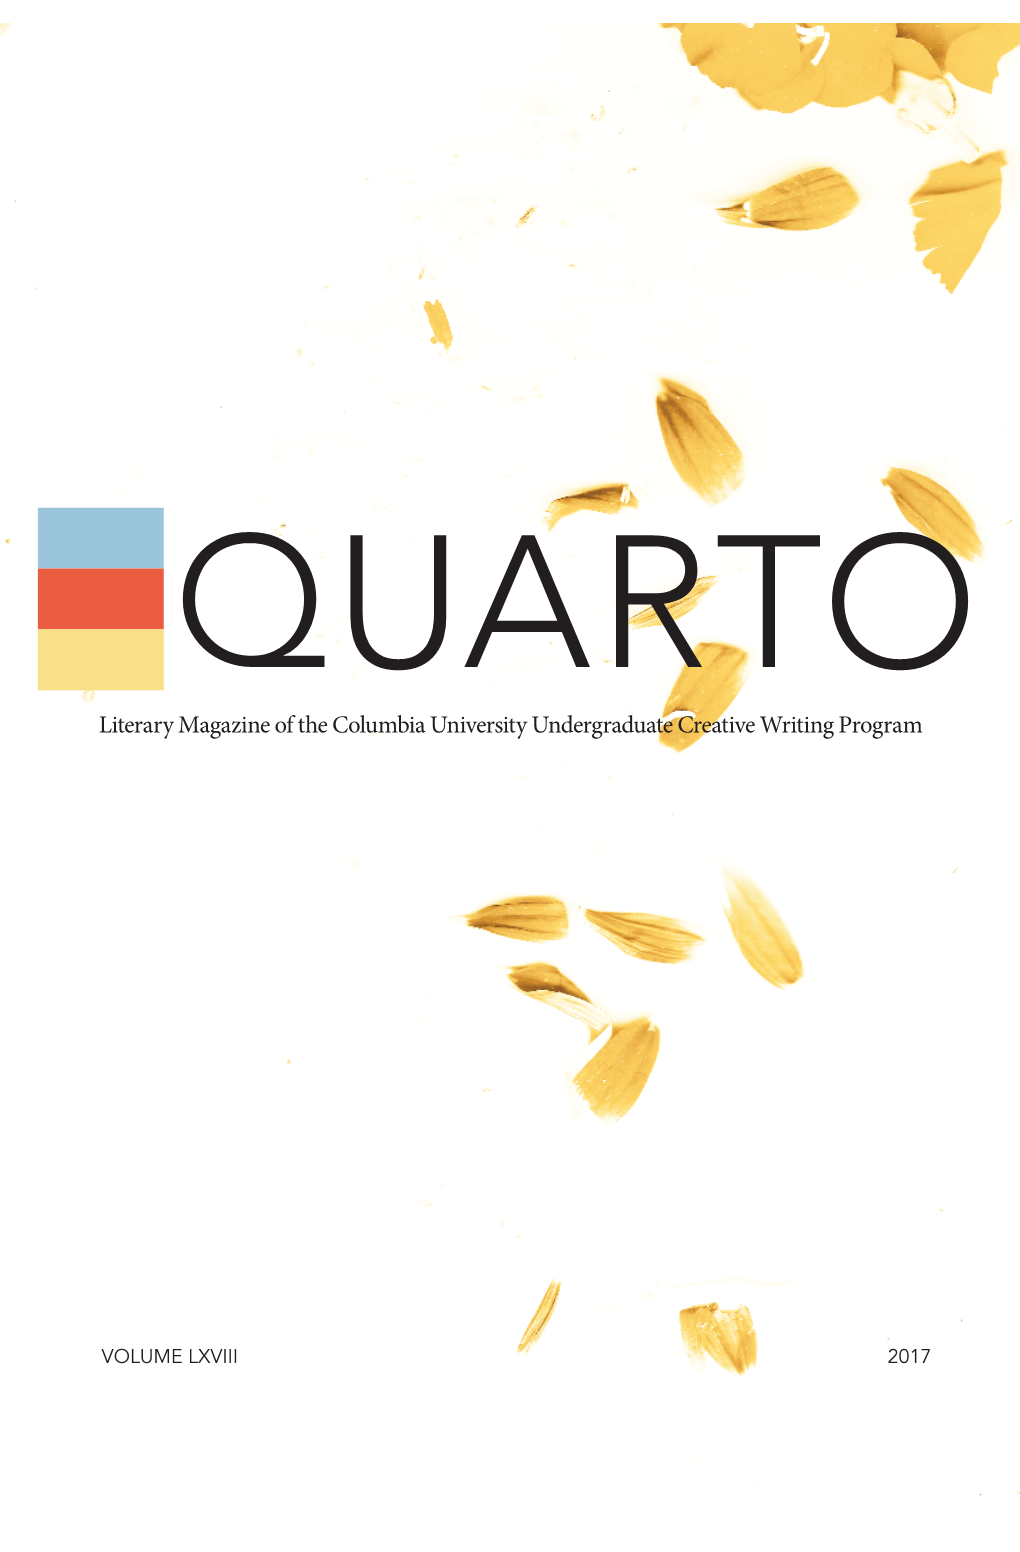 Literary Magazine of the Columbia University Undergraduate Creative Writing Program